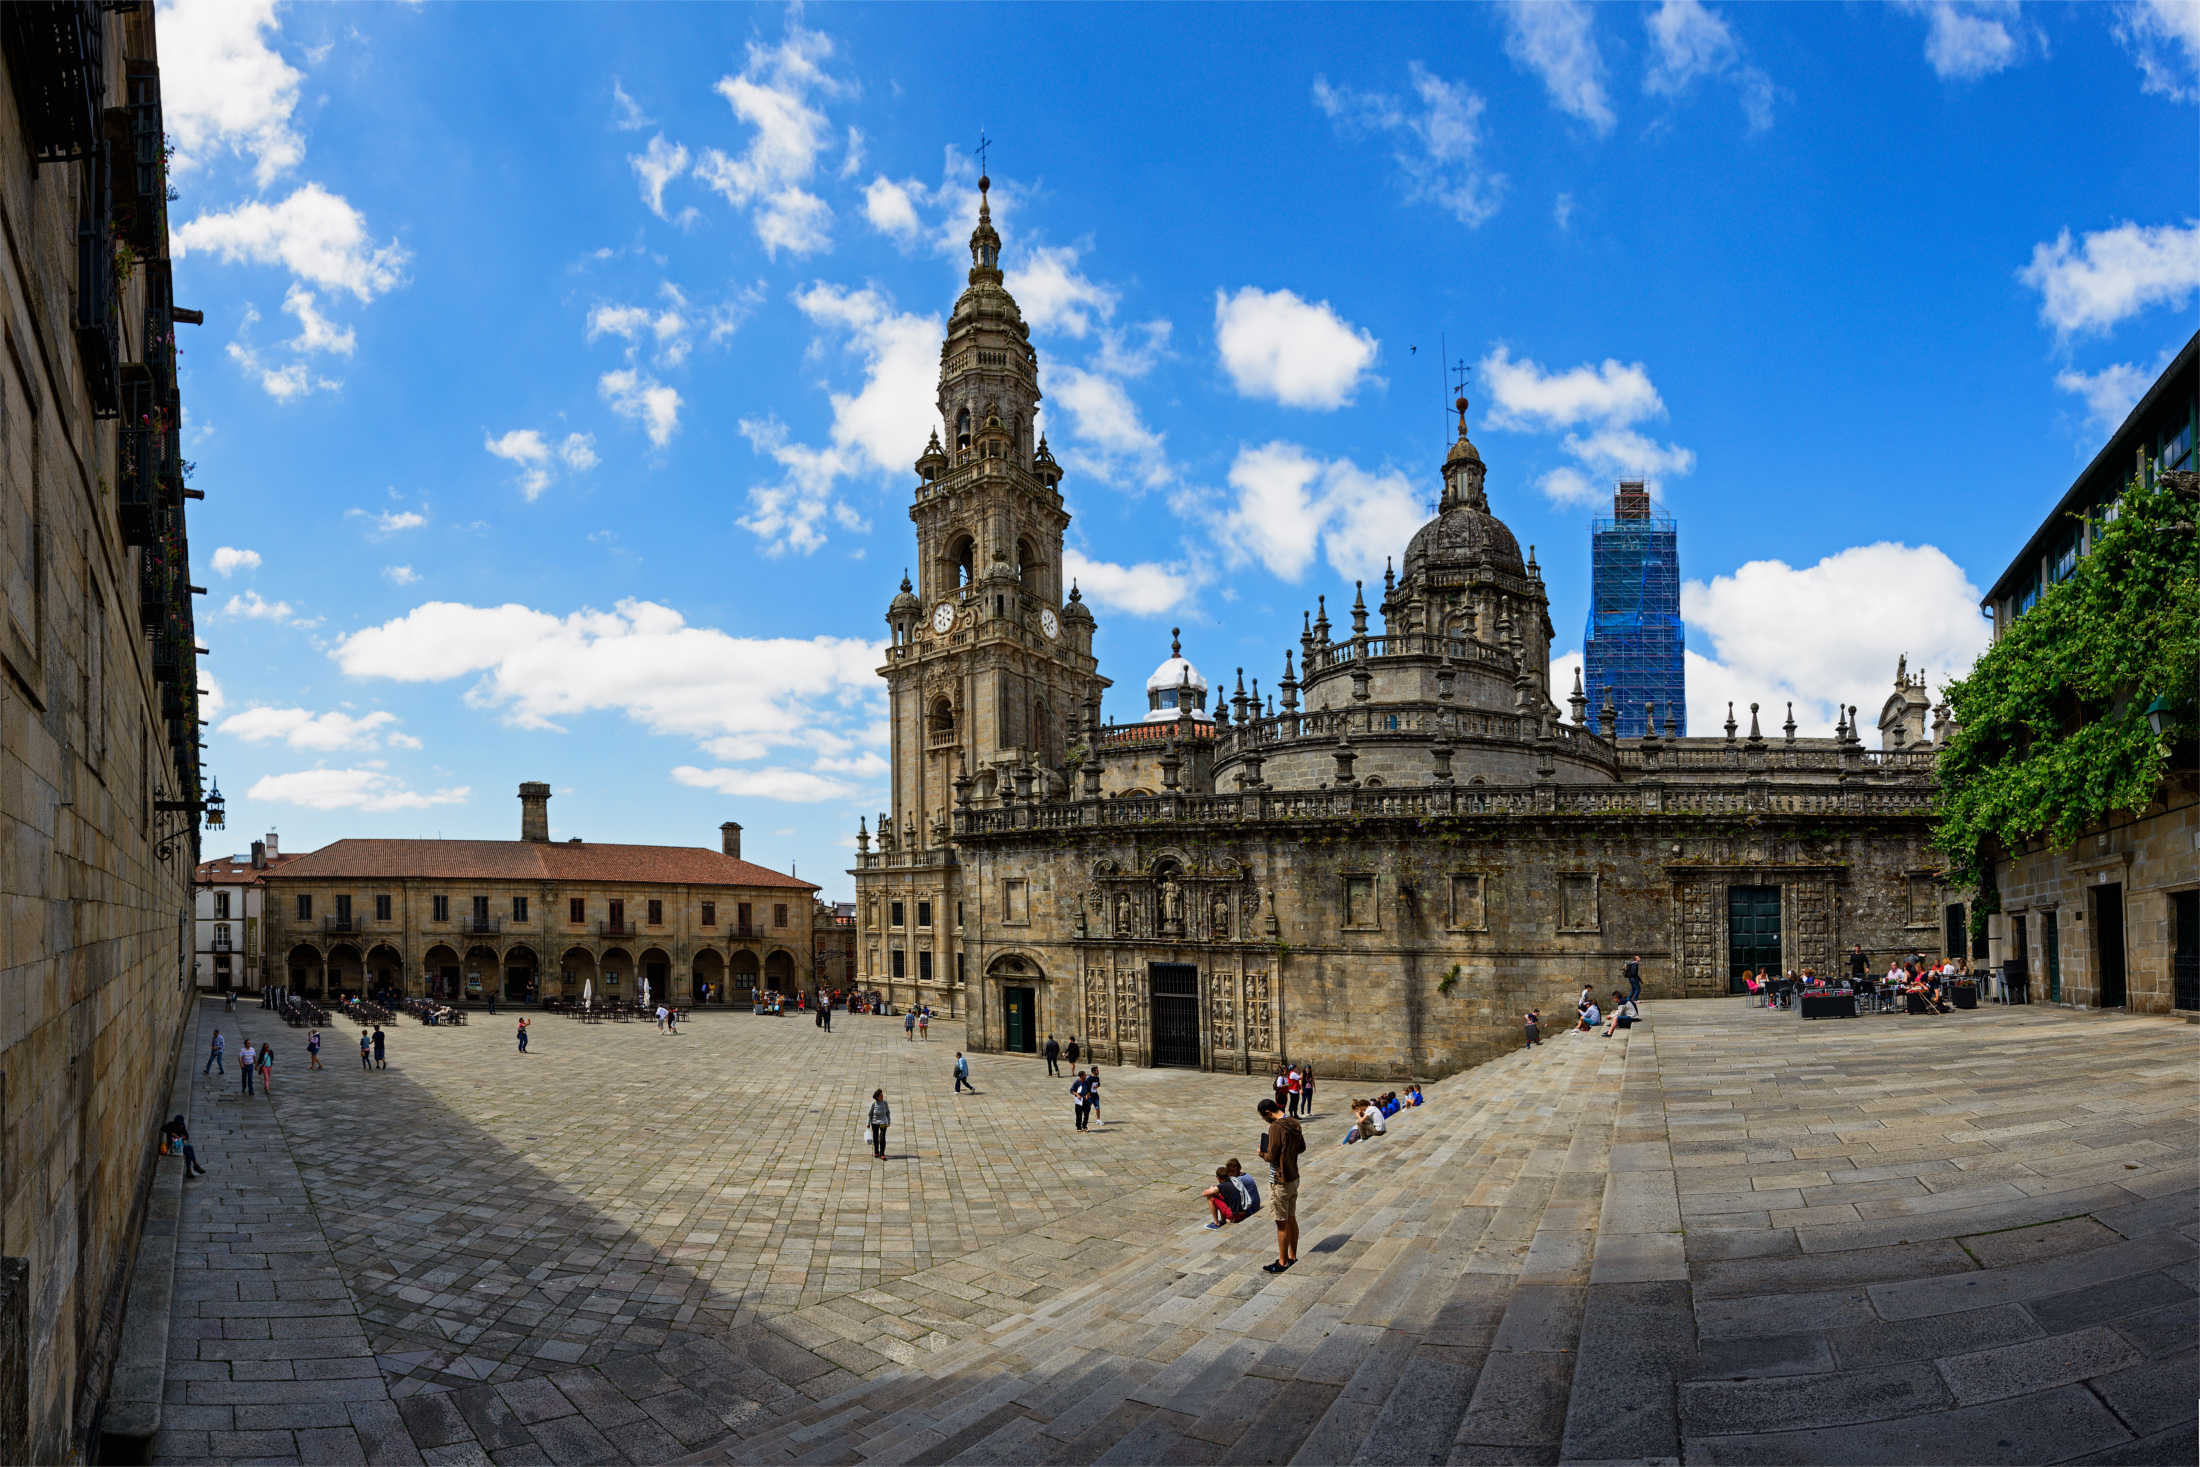 Galicia. The arrival of the Way of Saint James, Catedral de Santiago de Compostela